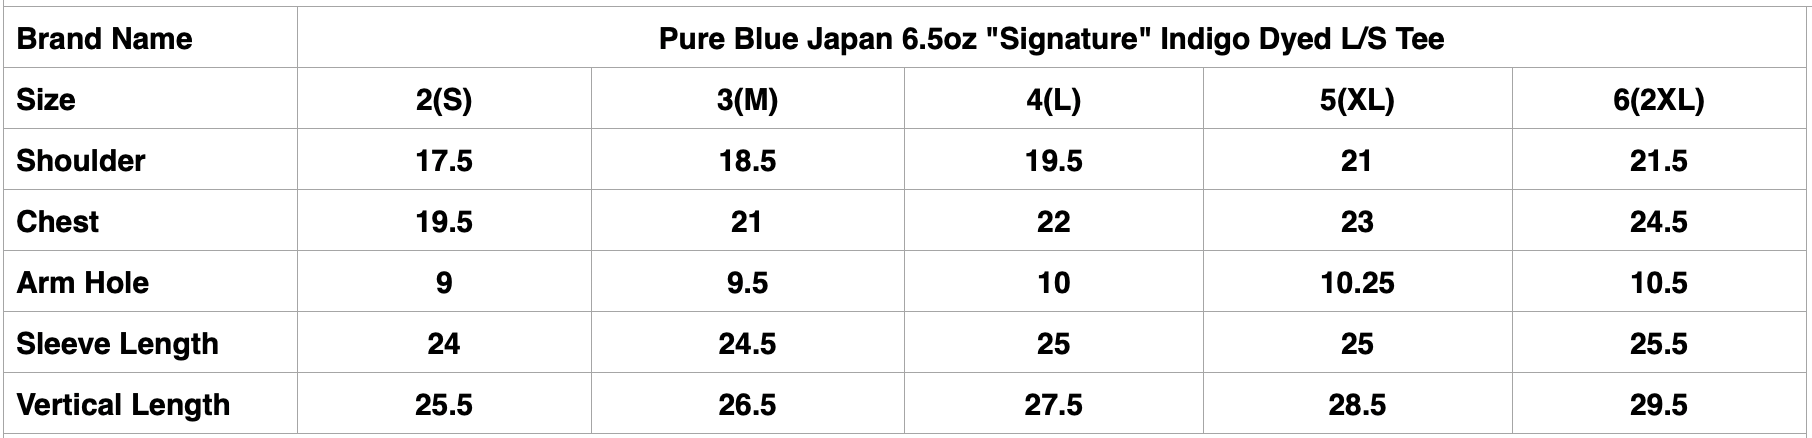 Pure Blue Japan 6.5oz "Signature" Indigo Dyed L/S Tee (Greencast Indigo)